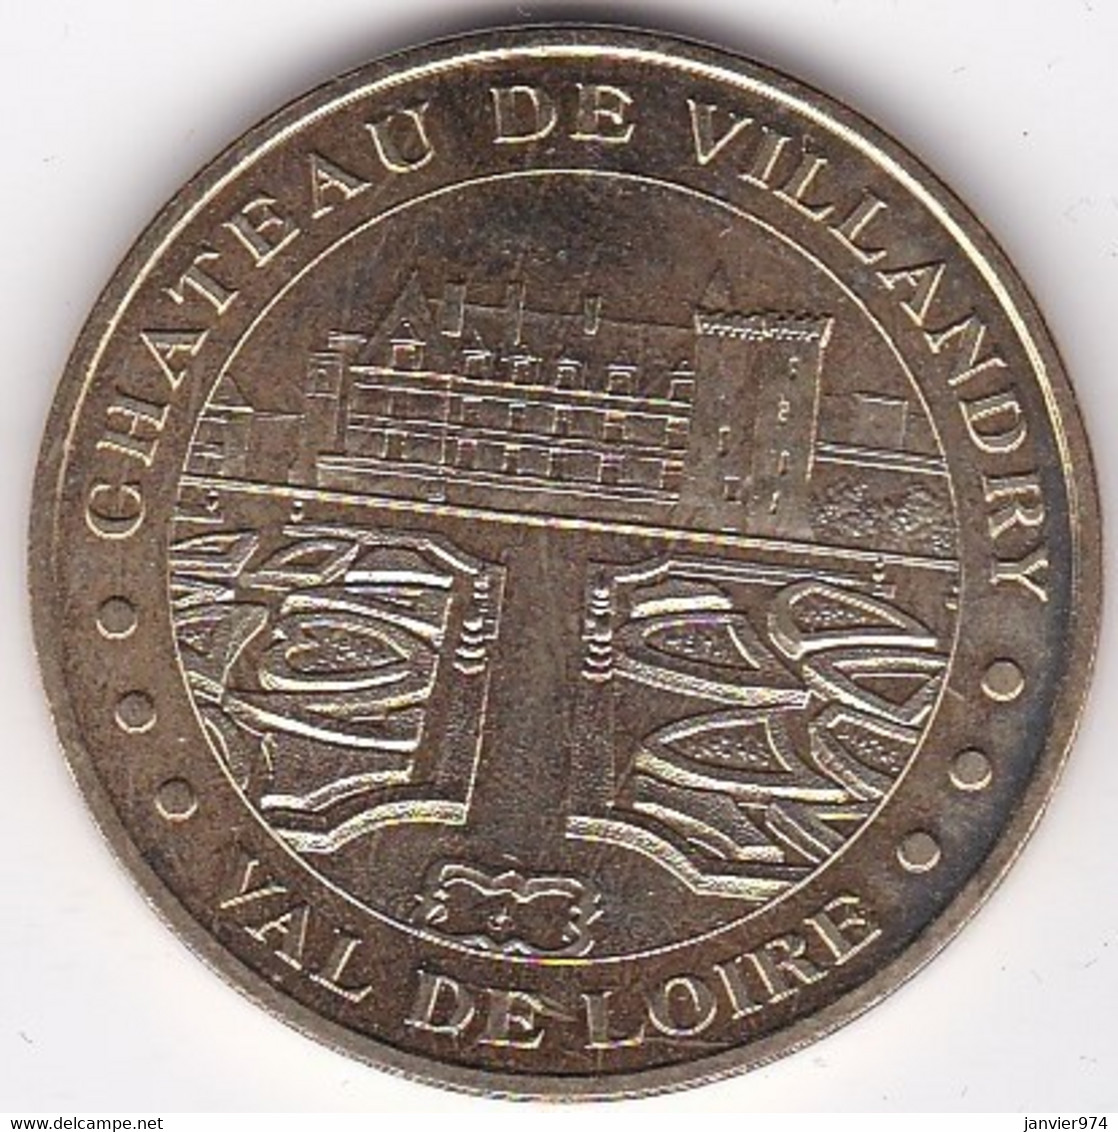 37. Val De Loire. Chateau De Villandry 2008. MDP - 2008